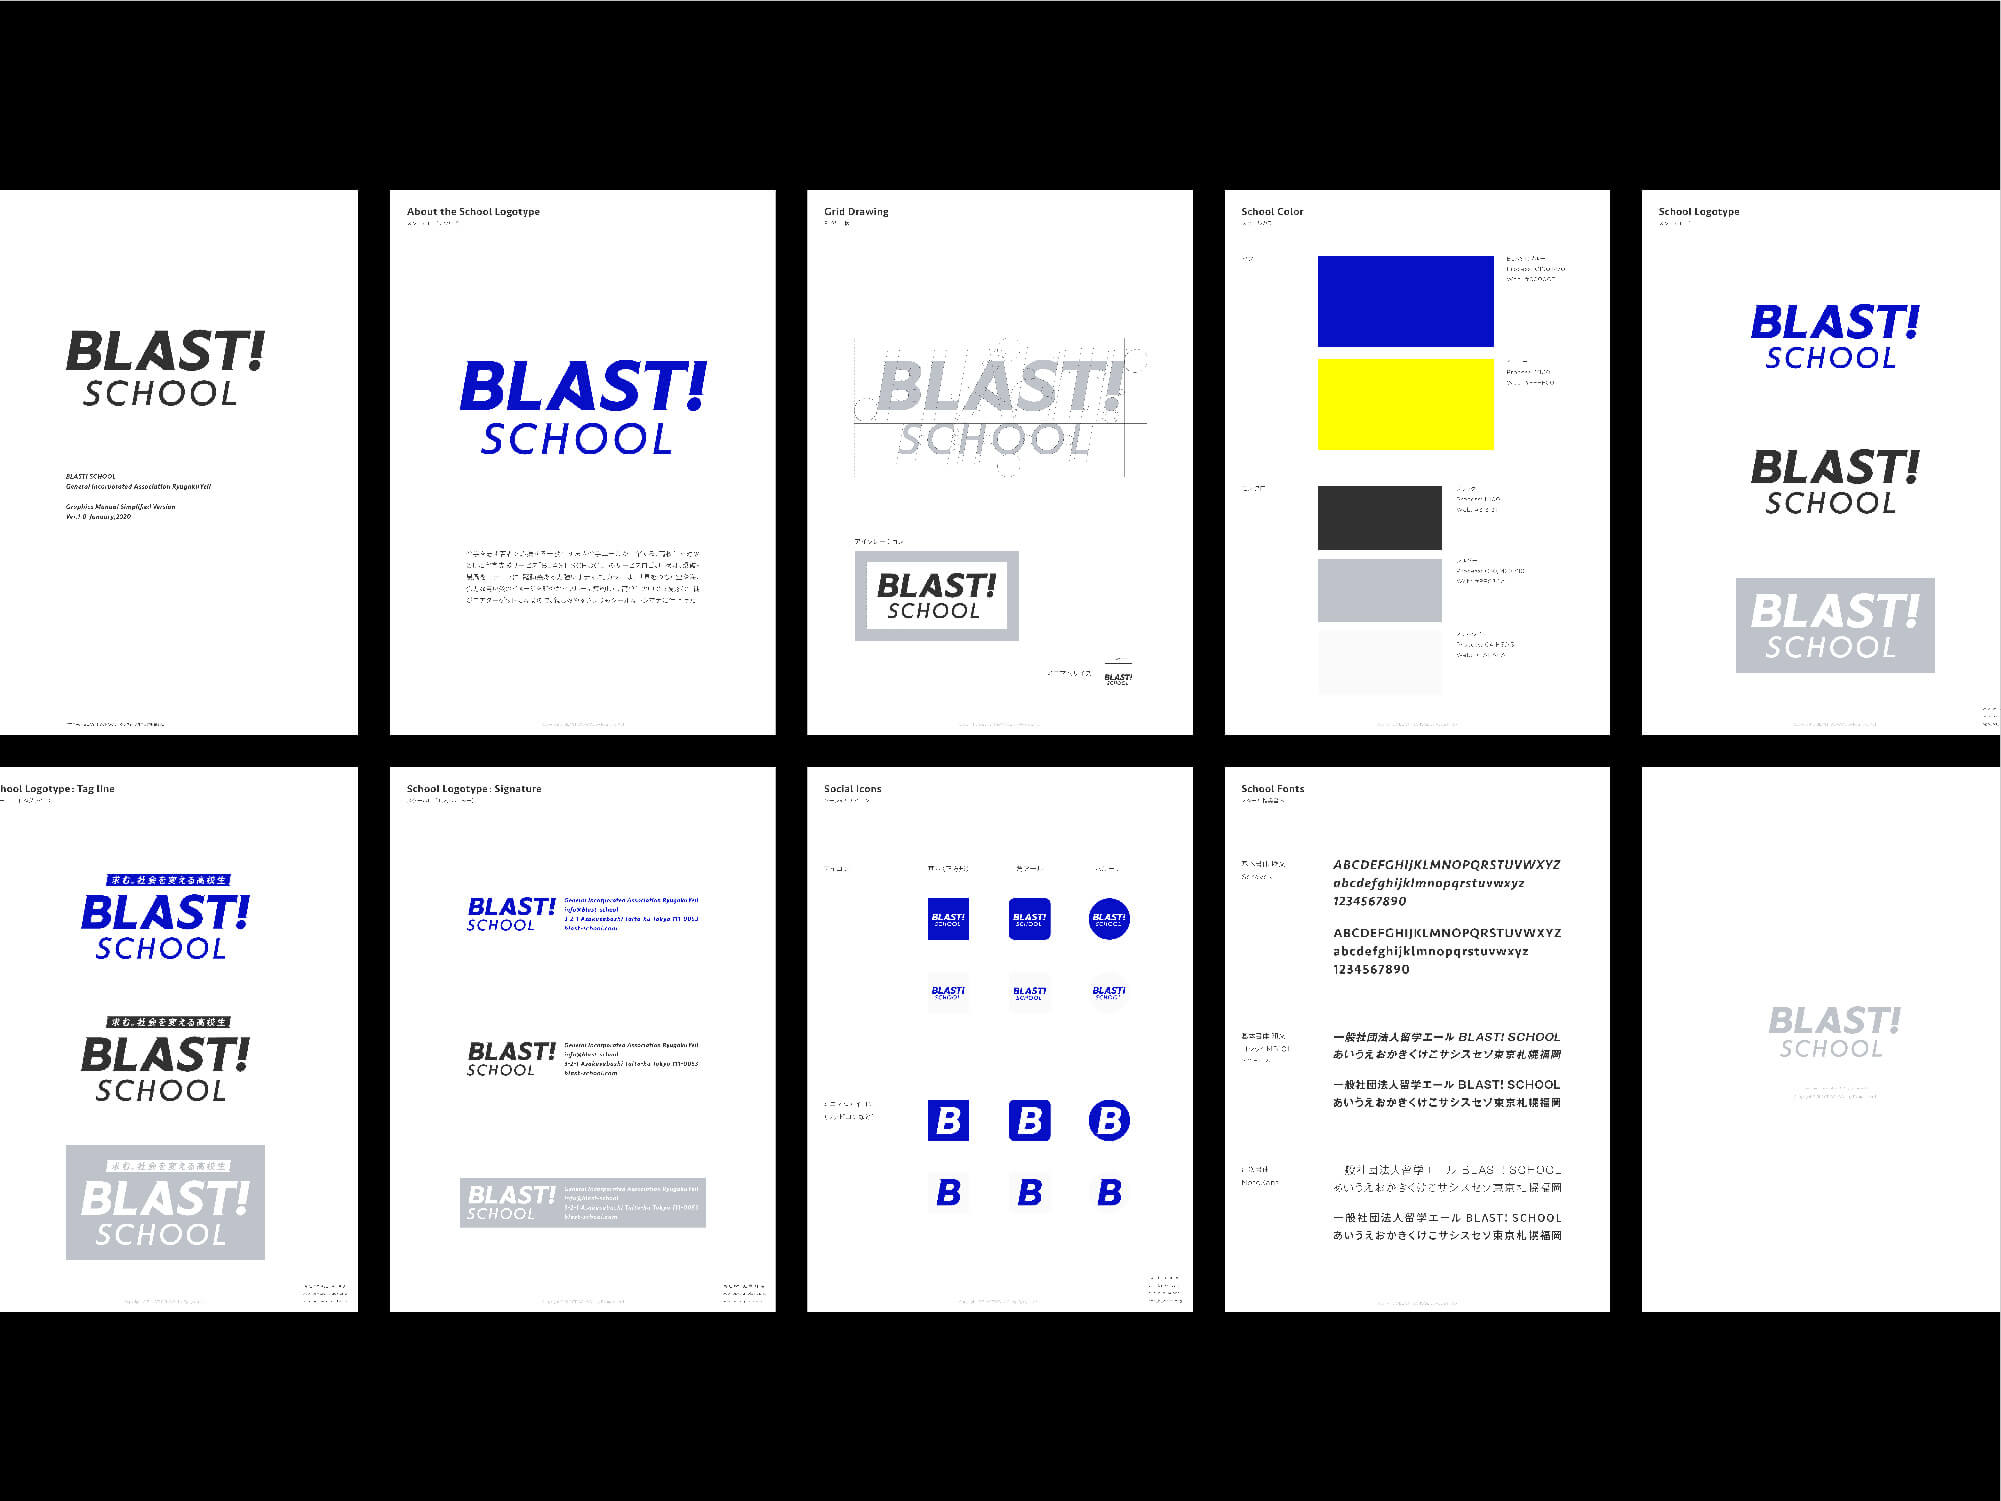 BLAST SCHOOL Service Brandingのサンプル画像です